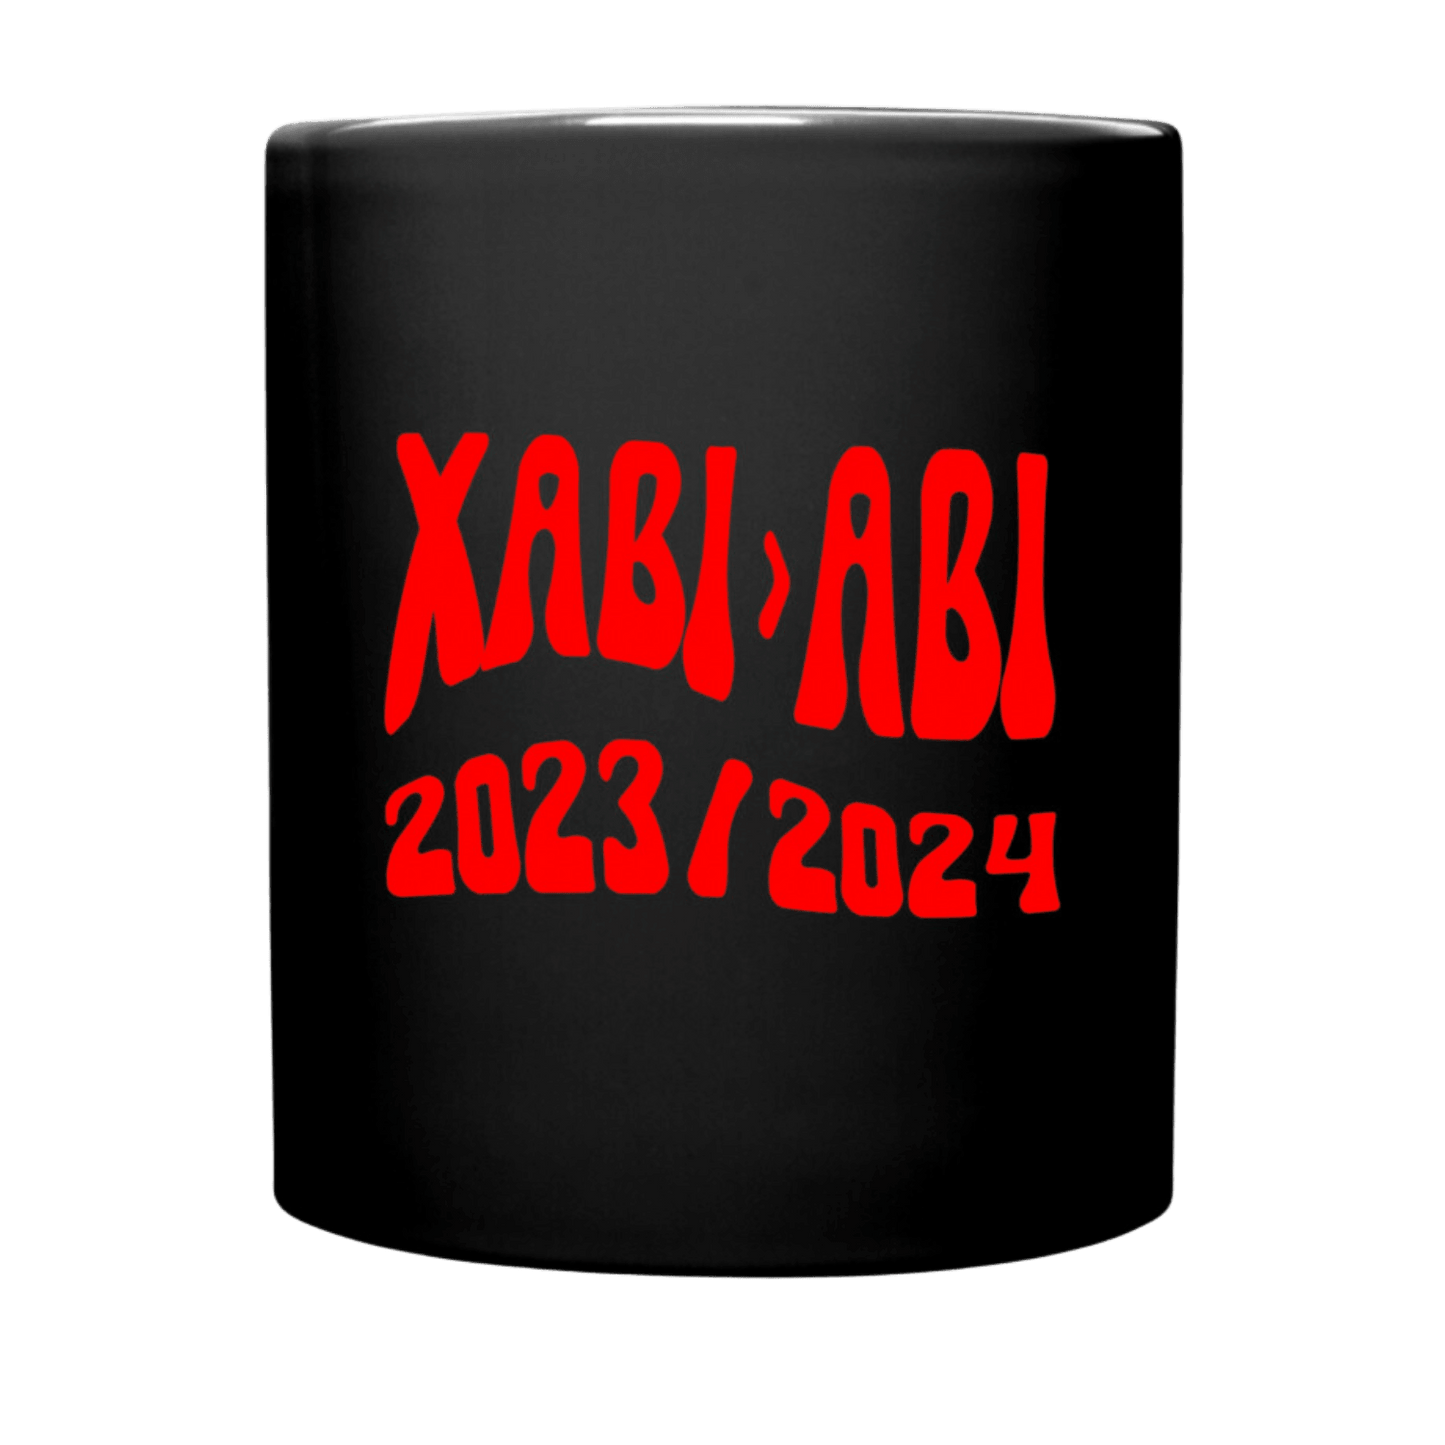 XABI > ABI - Schwarze Tasse